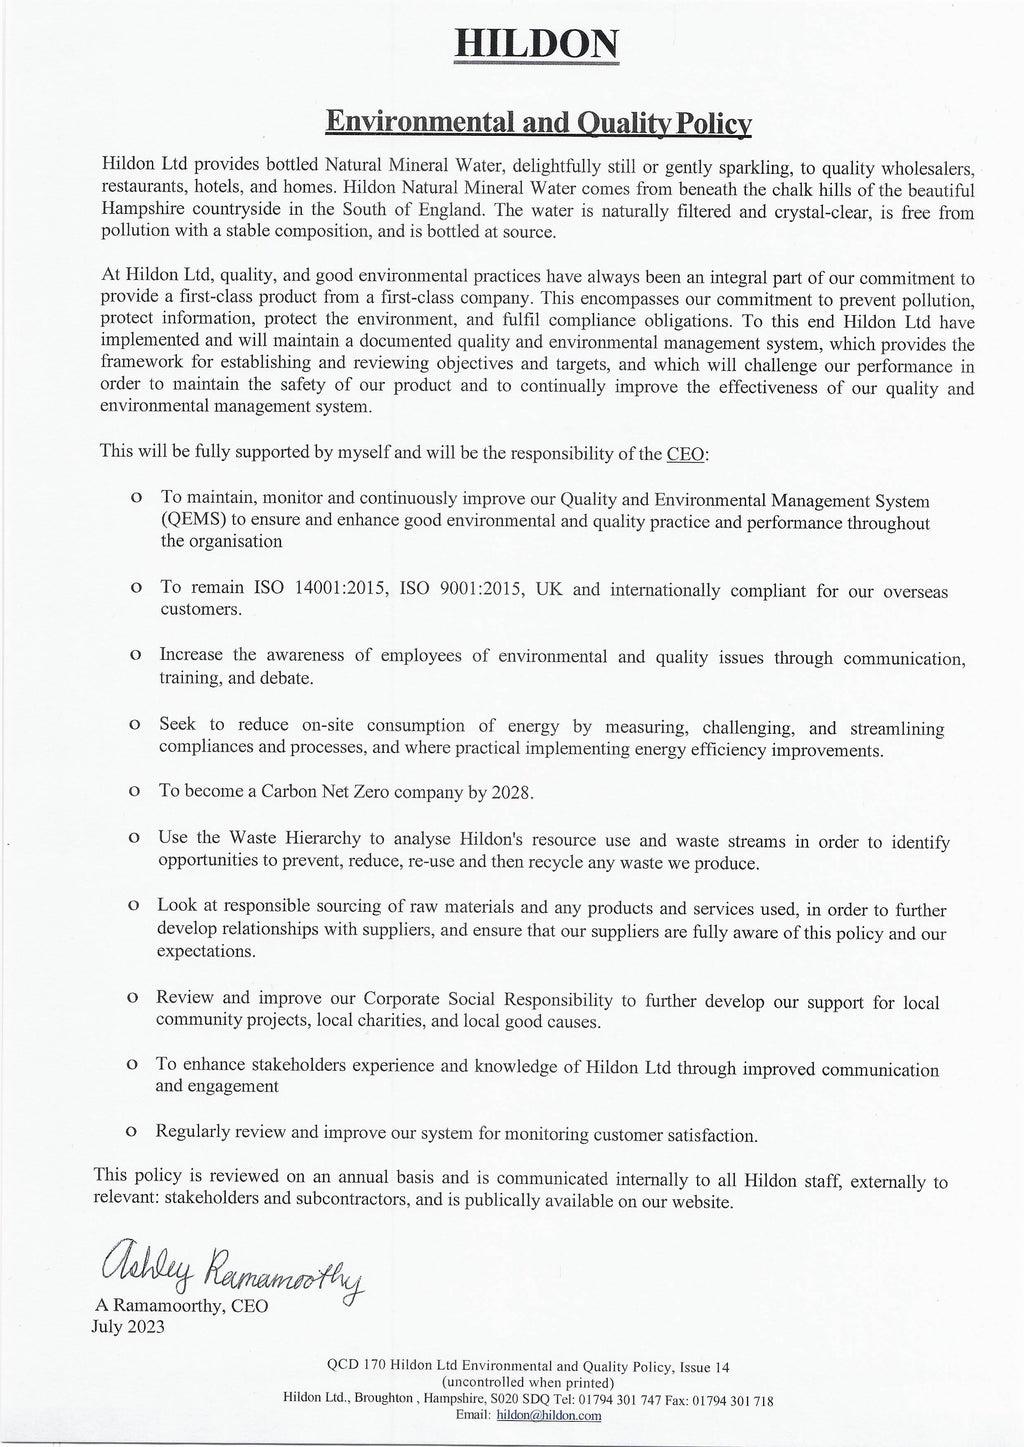 July 2023 Ashley Ramamoorthy signed E&Q Policy